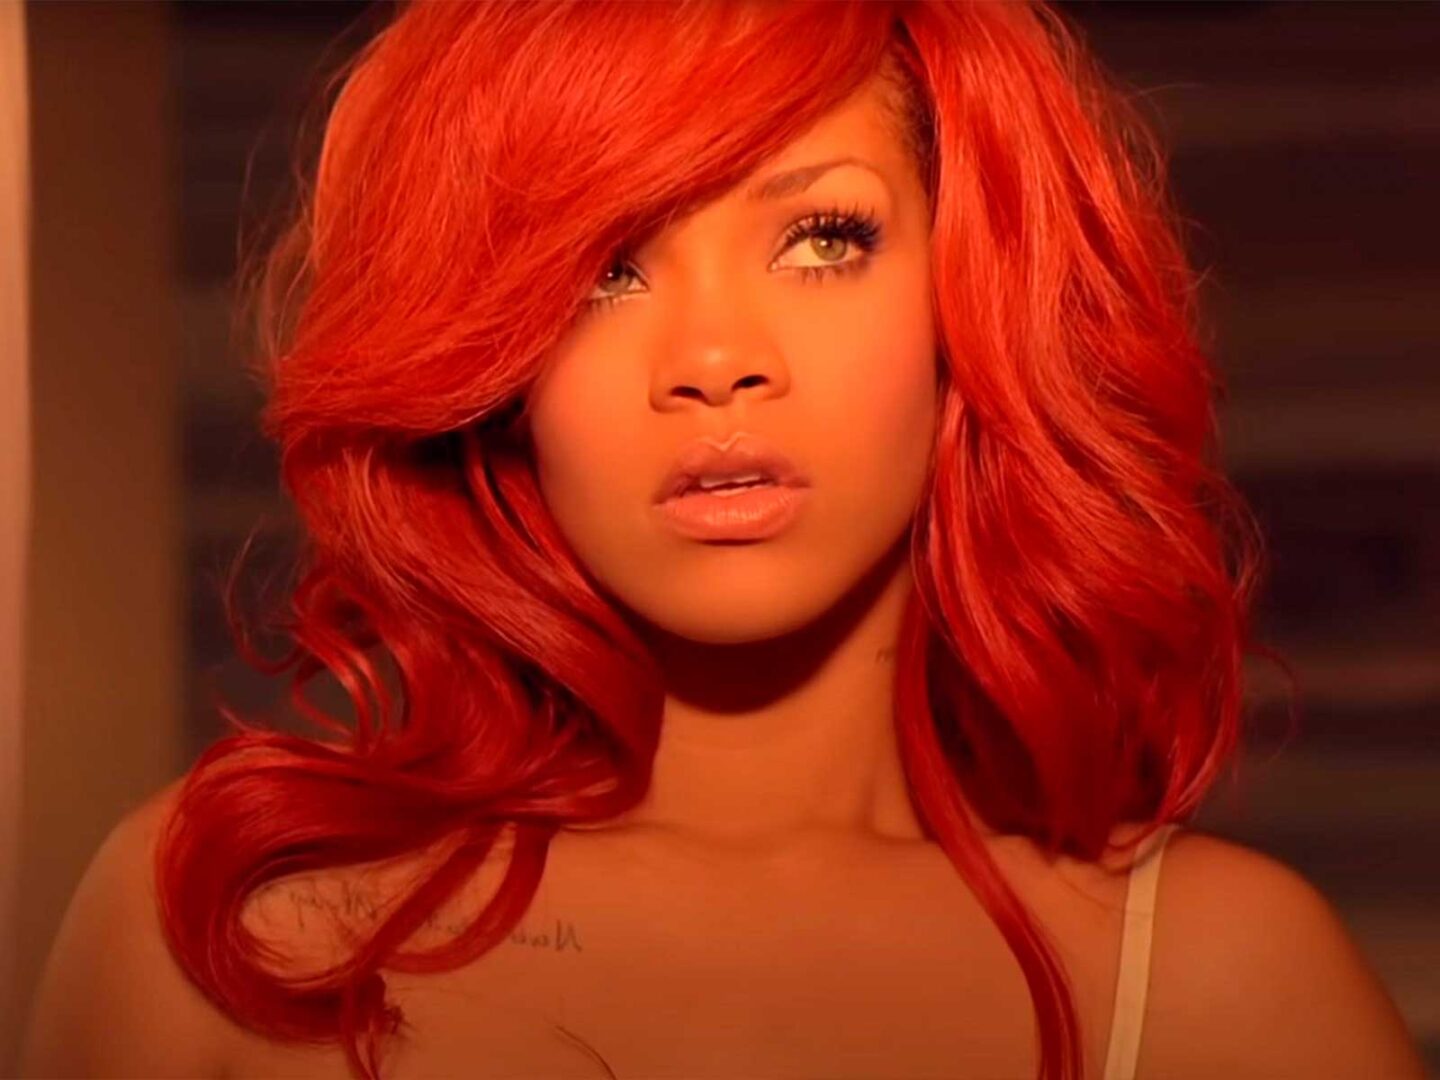 Muni Long reveals she wrote Rihanna’s ‘California King Bed’ in 10 minutes